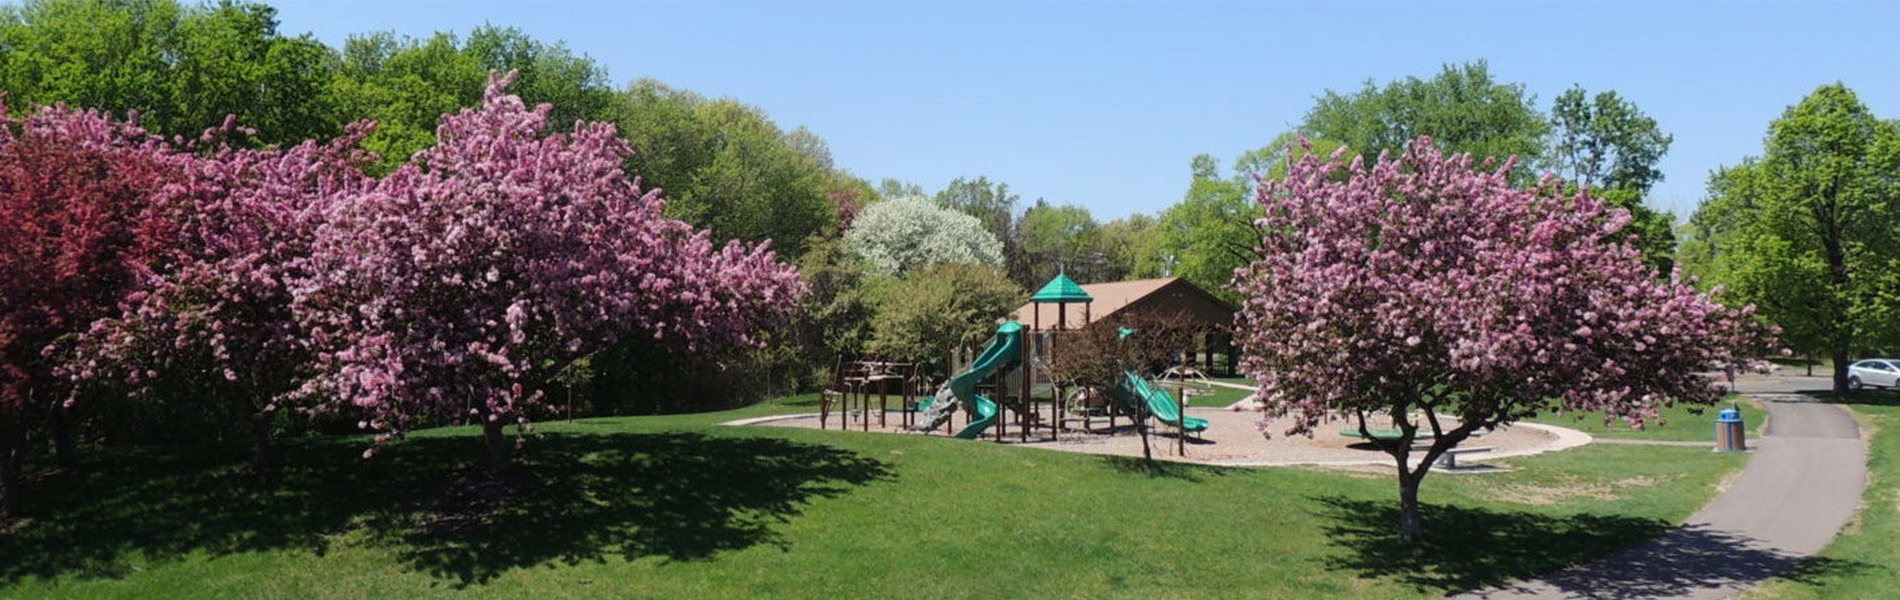 Zero Gravity Trampoline Park, Mounds View - Family Fun Twin Cities